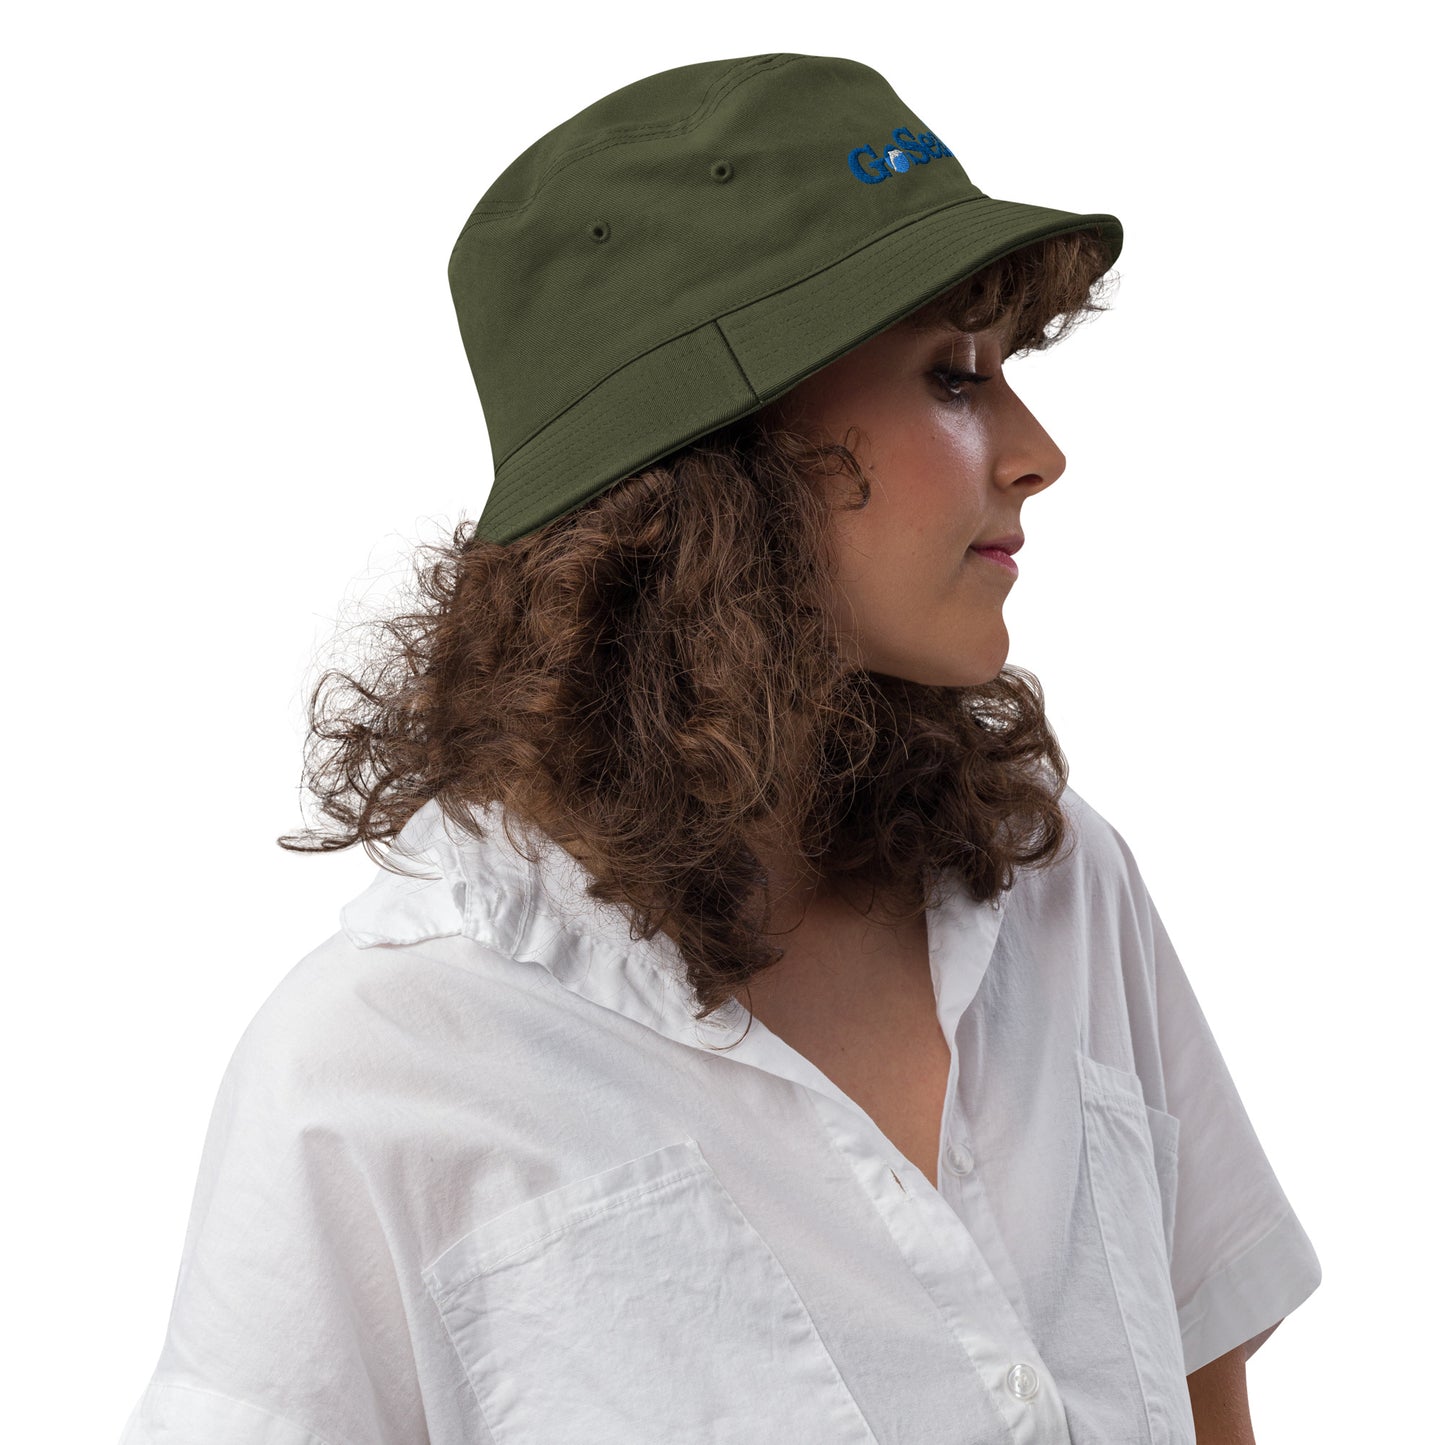  Unisex Bucket Hat - Army Green - Side view on woman's head - Go Sea Kayak Byron Bay logo on front  - Genuine Byron Bay Merchandise | Produced by Go Sea Kayak Byron Bay